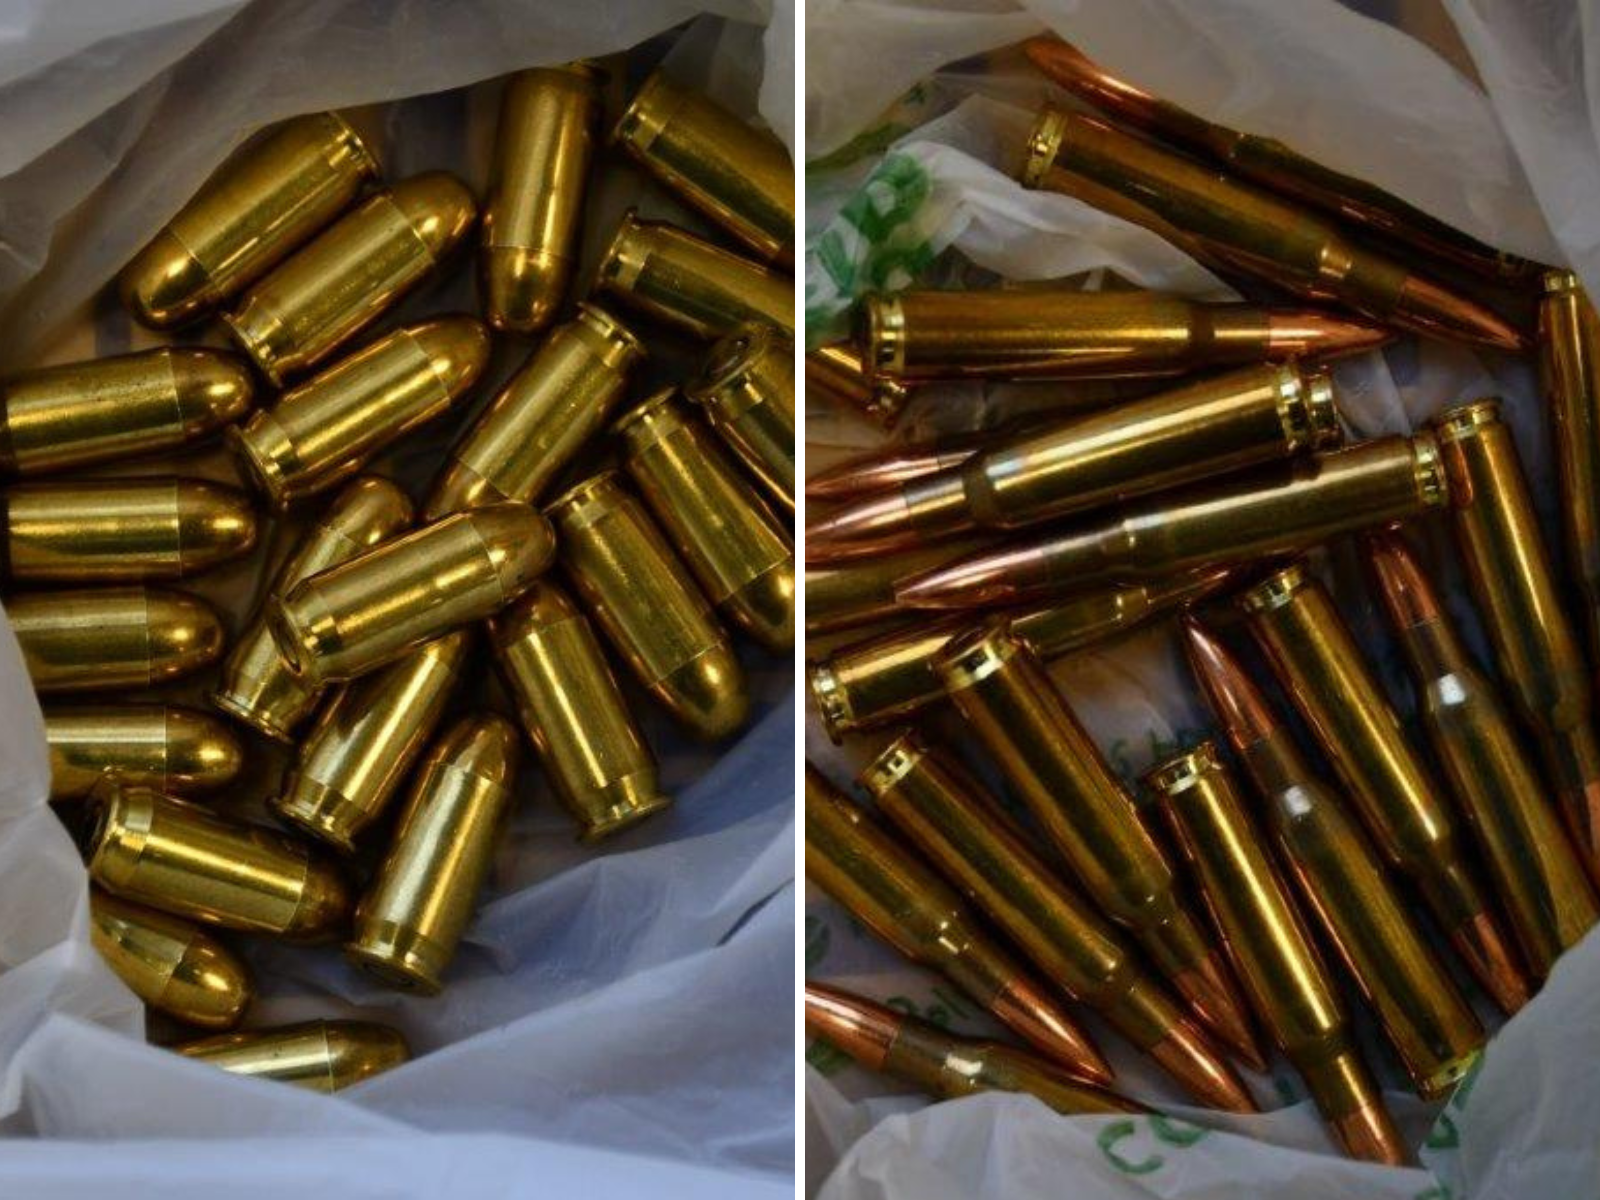 Ammunition seized by Gardaí in Kildare.